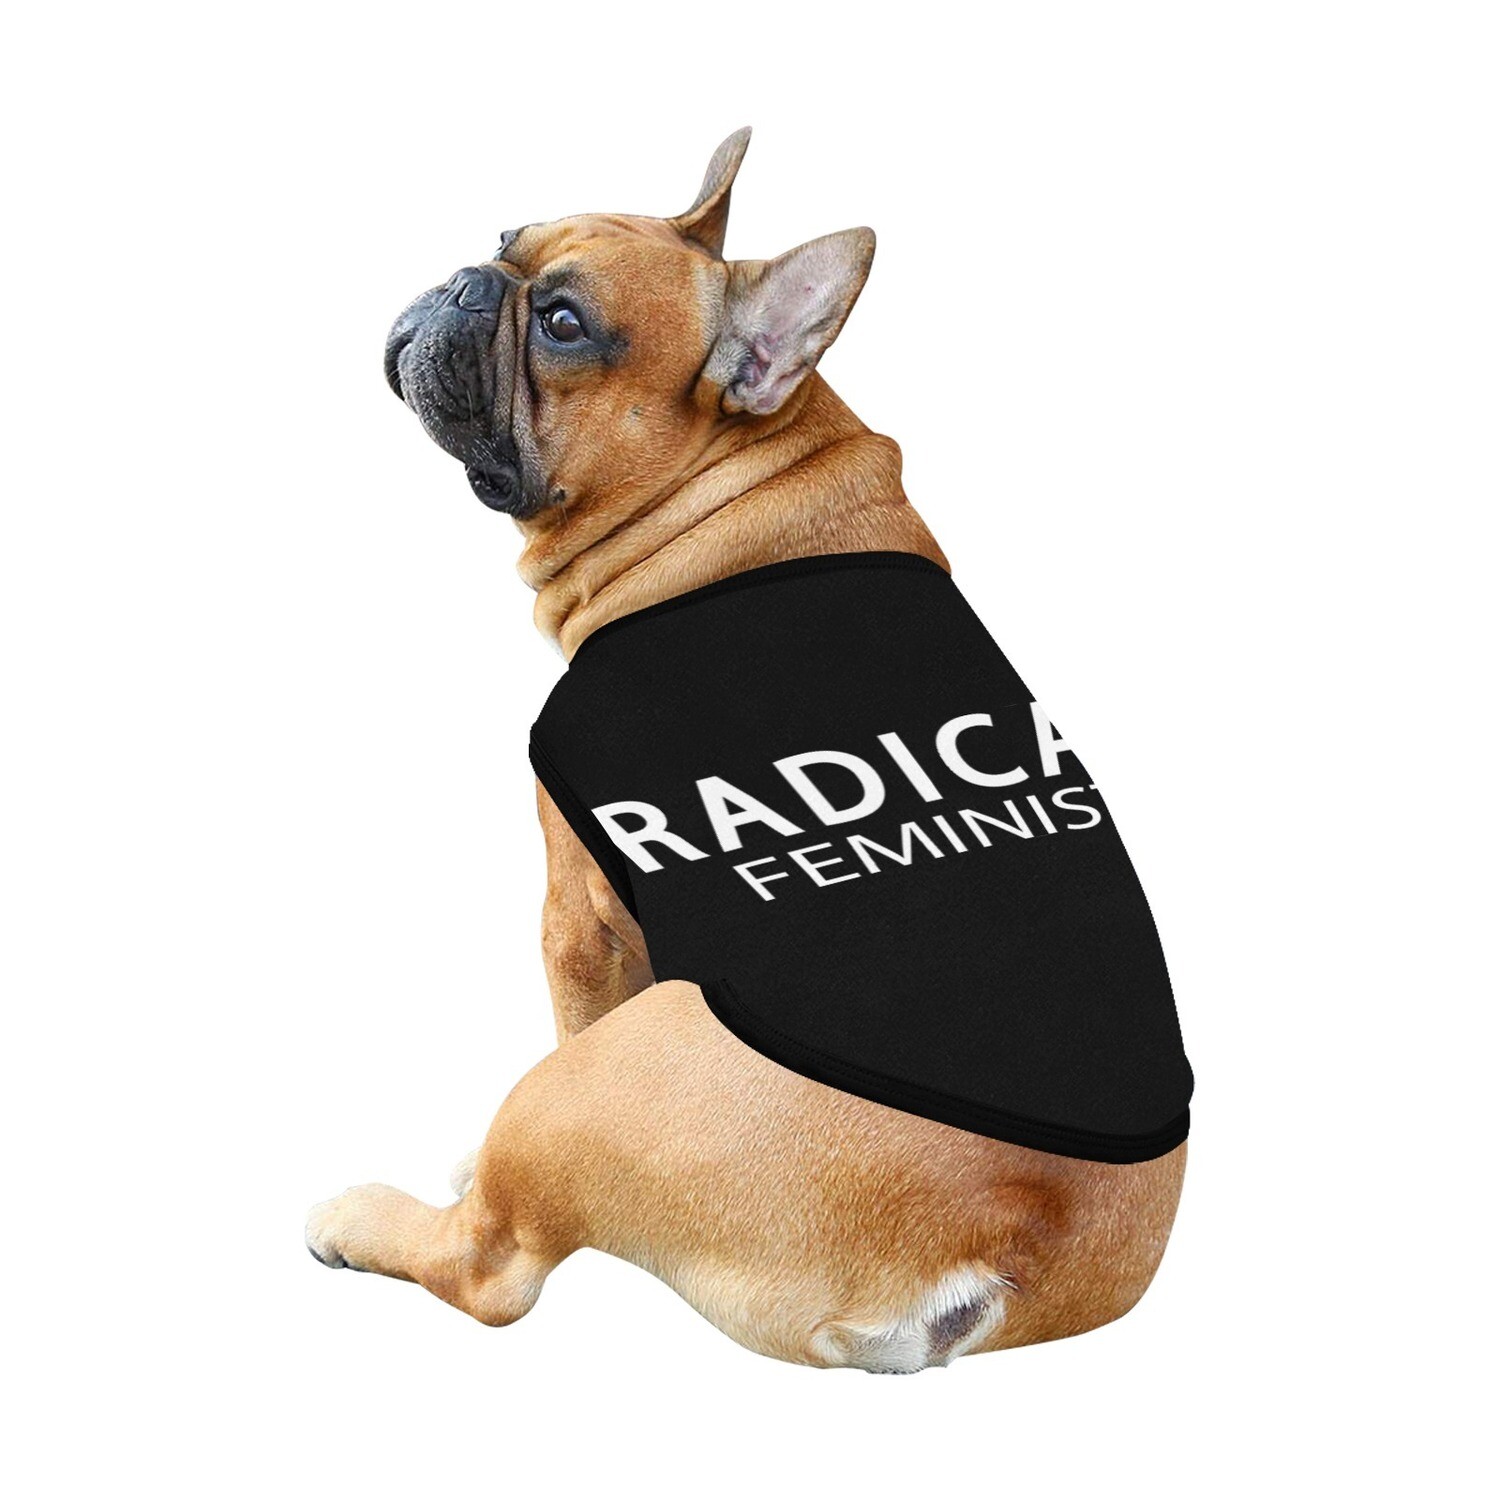 🐕 David Rose Radical Feminist Dog t-shirt, Dog Tank Top, Dog shirt, Dog clothes, Gifts, front back print, 7 sizes XS to 3XL, Schitt's Creek, TV series